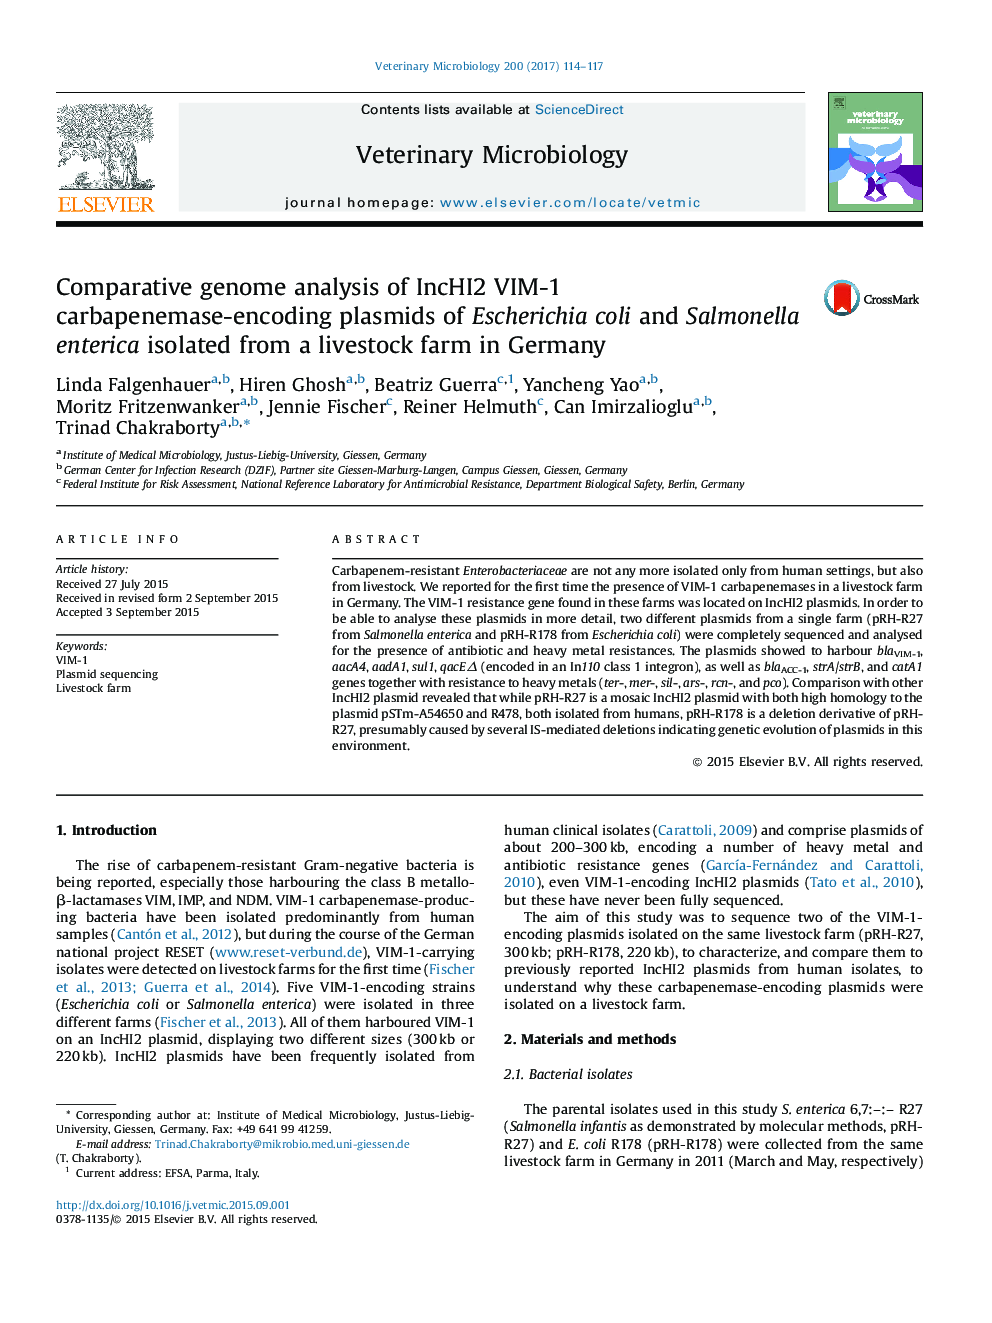 Comparative genome analysis of IncHI2 VIM-1 carbapenemase-encoding plasmids of Escherichia coli and Salmonella enterica isolated from a livestock farm in Germany